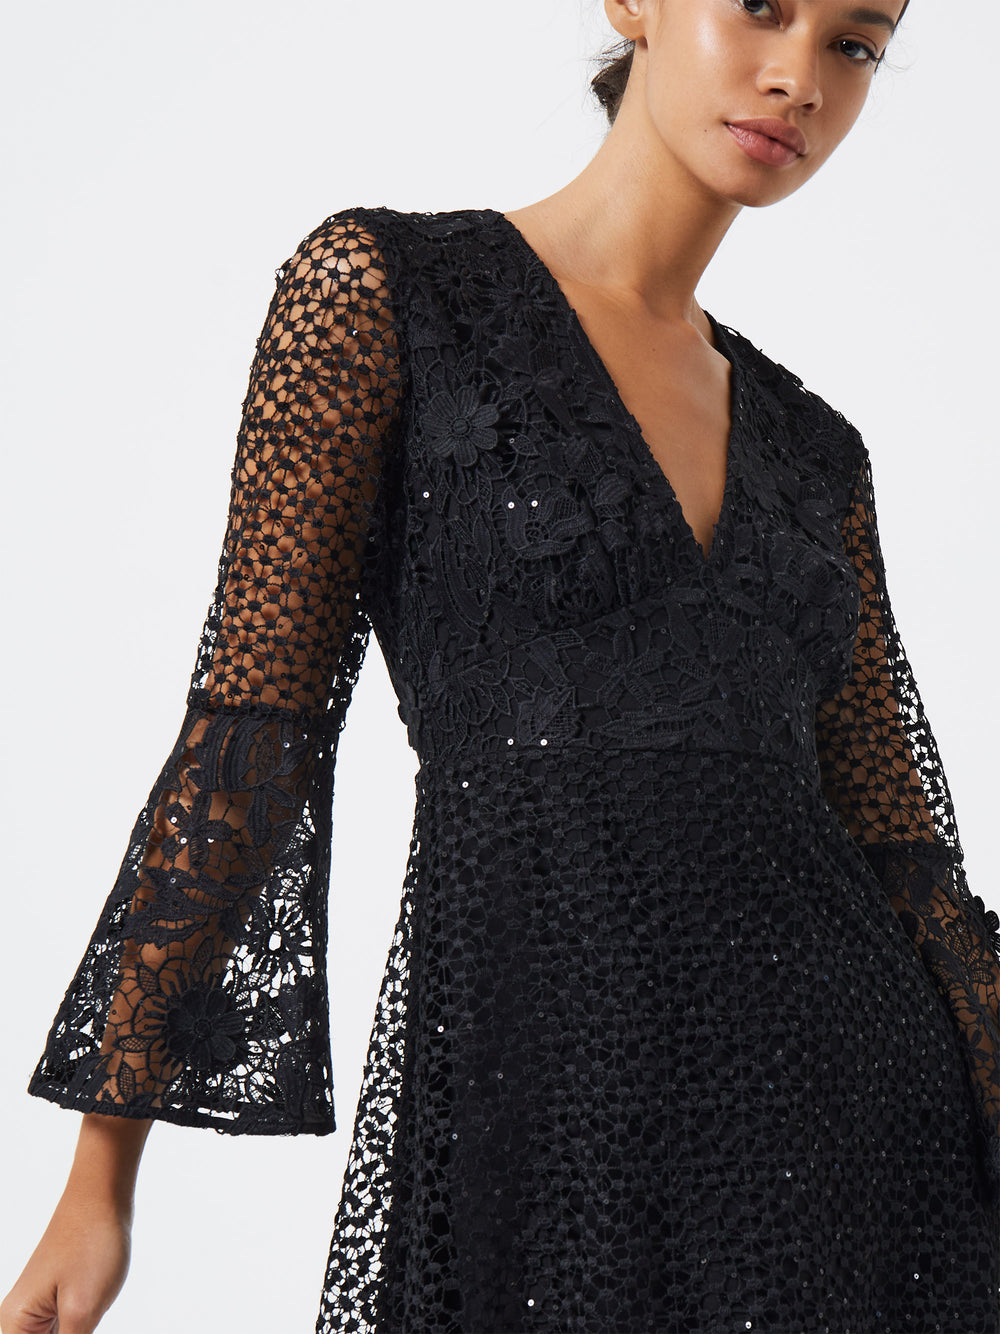 Gudrana Caballo Lace Mini Dress Blackblack Sequins French Connection Uk 9370